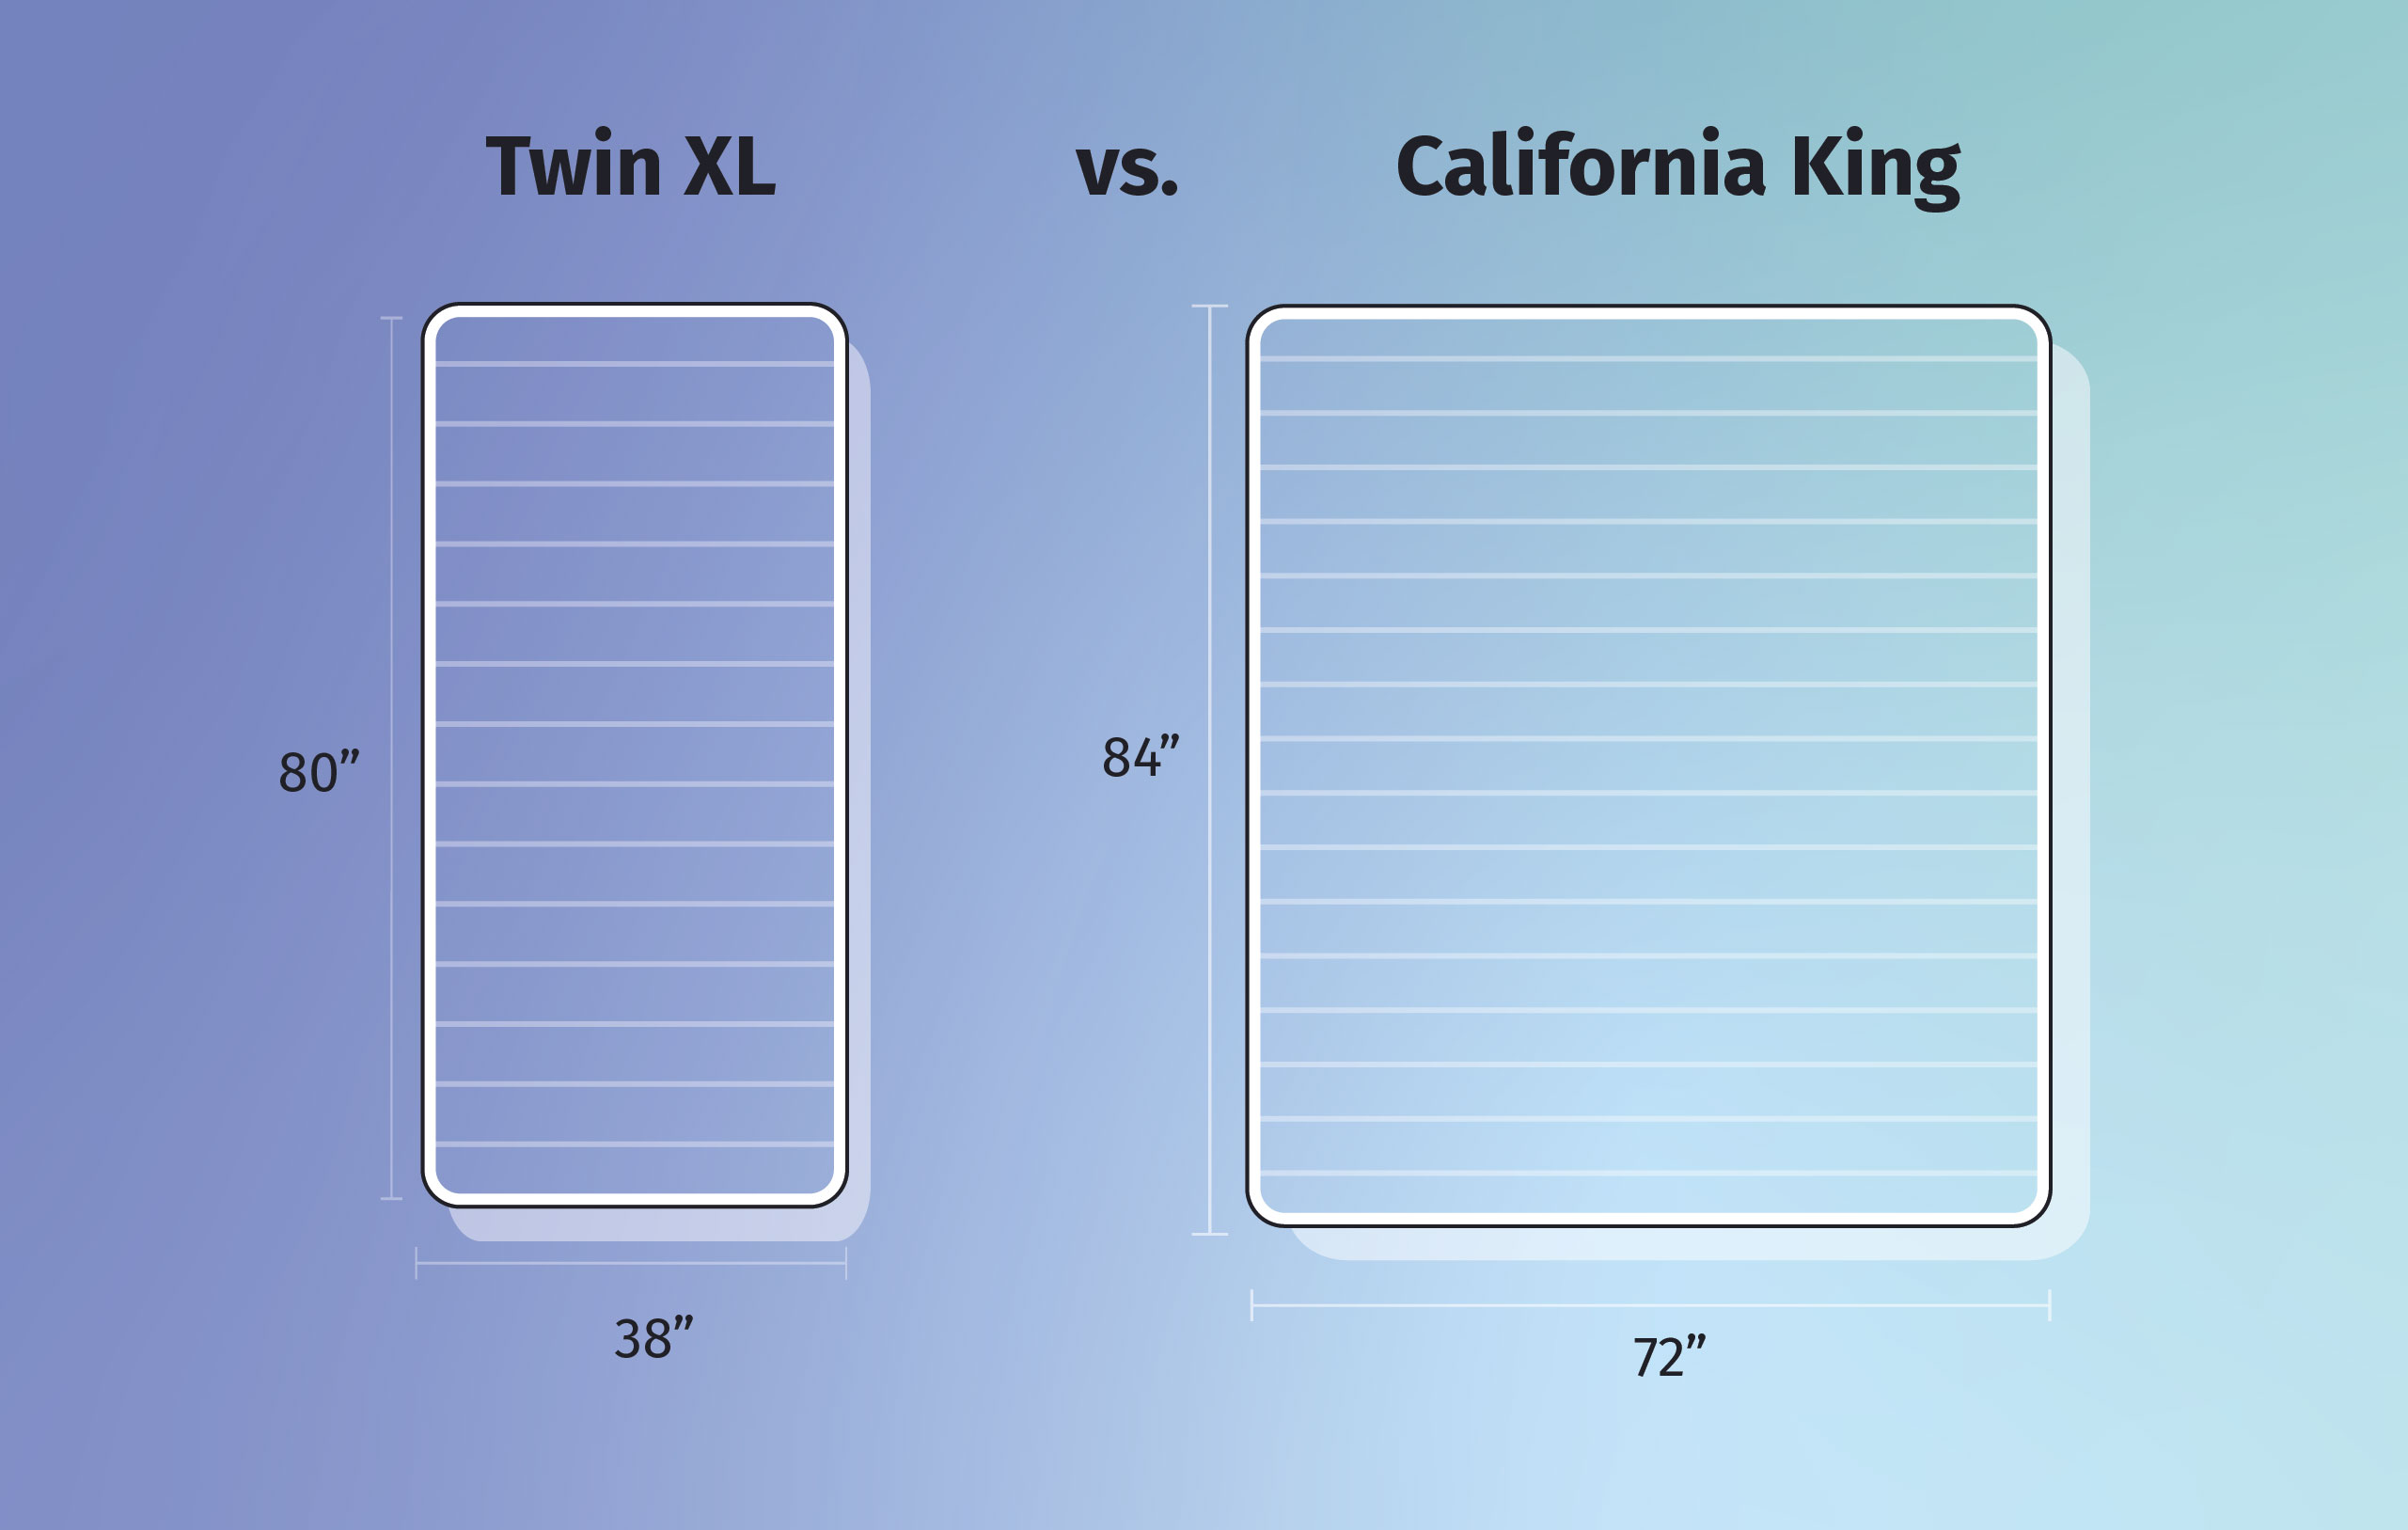 twin xl vs. California king mattress size comparison